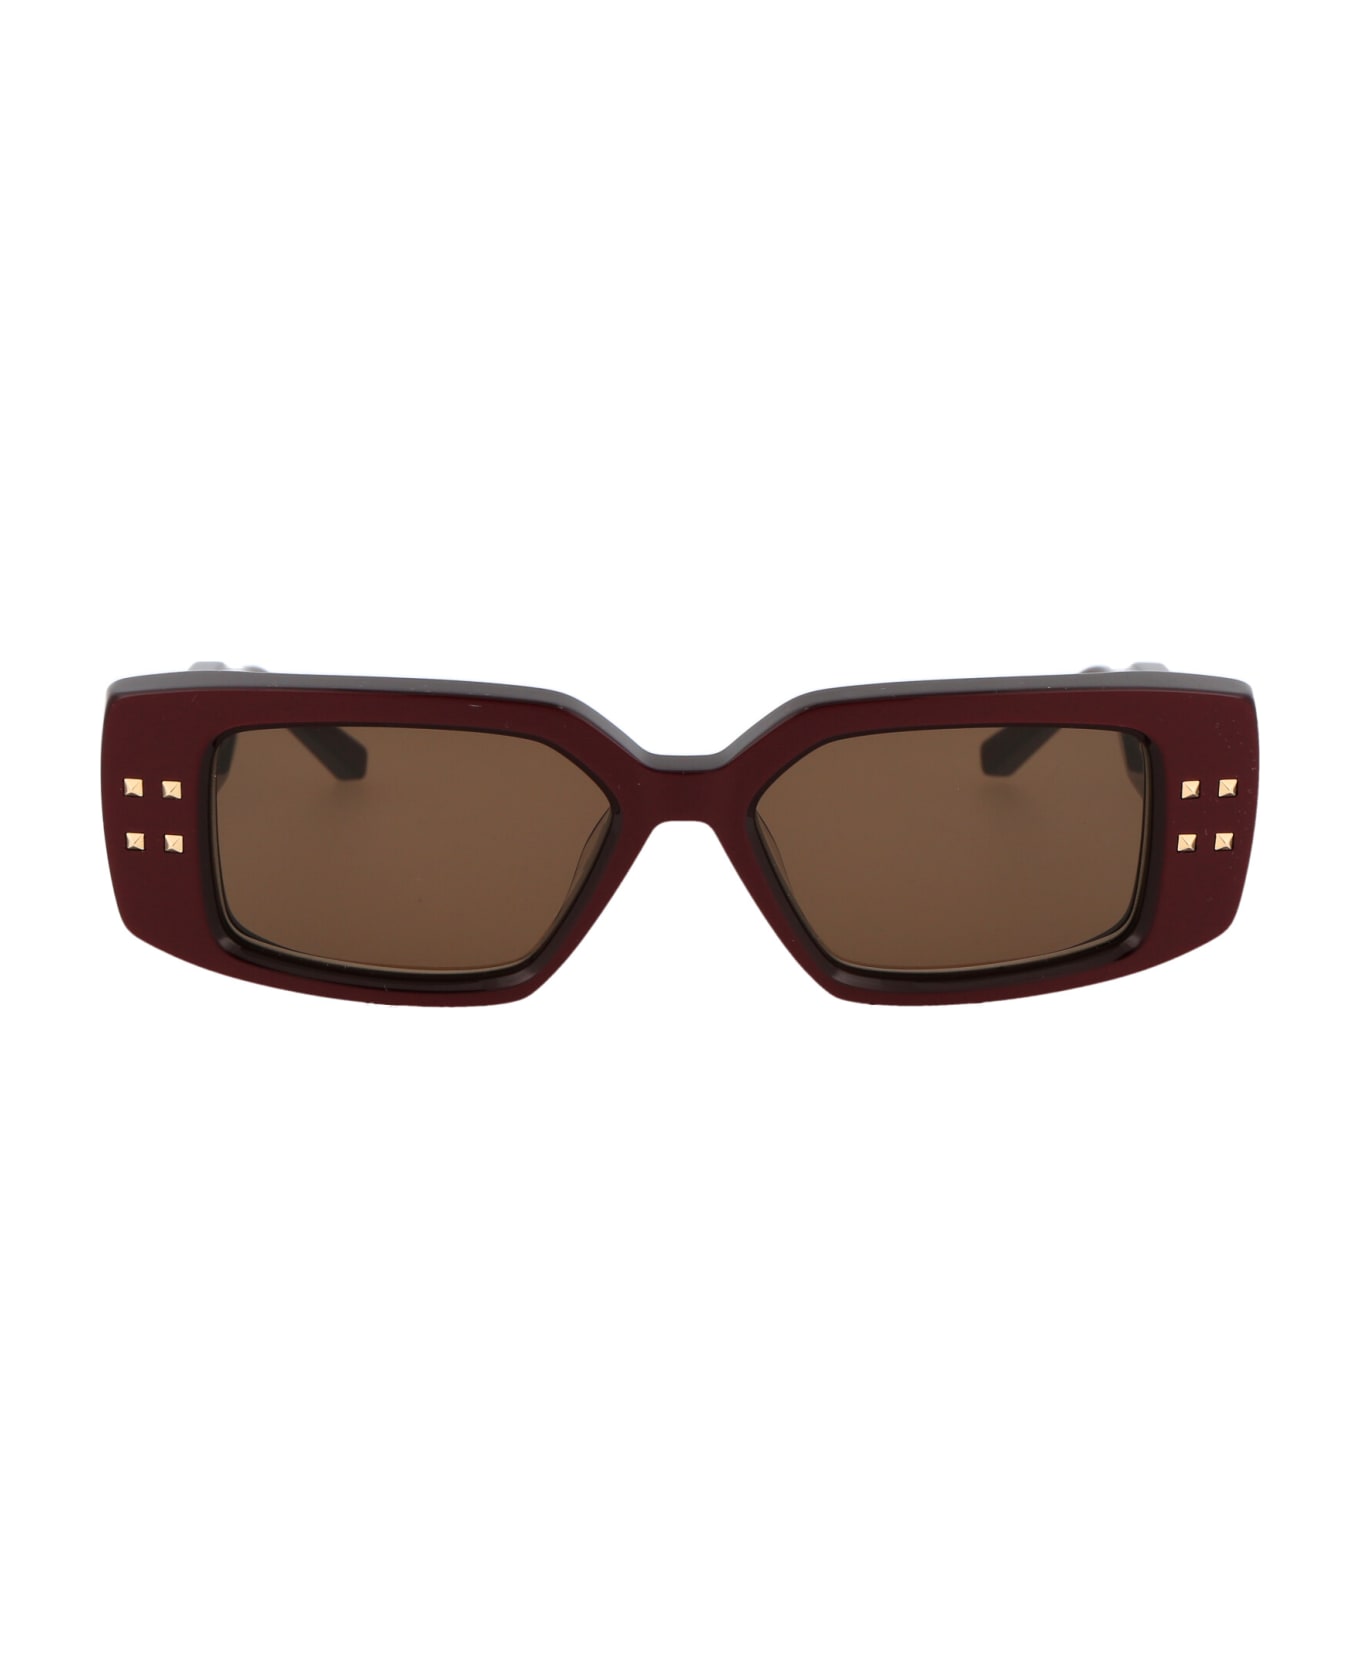 Valentino Eyewear V - Cinque TYPE Sunglasses - 108Occhiali da sole FURLA TYPE Sunglasses SFU535 WD00035-BX0728-01B00-4-401-20-CN-D Talco h